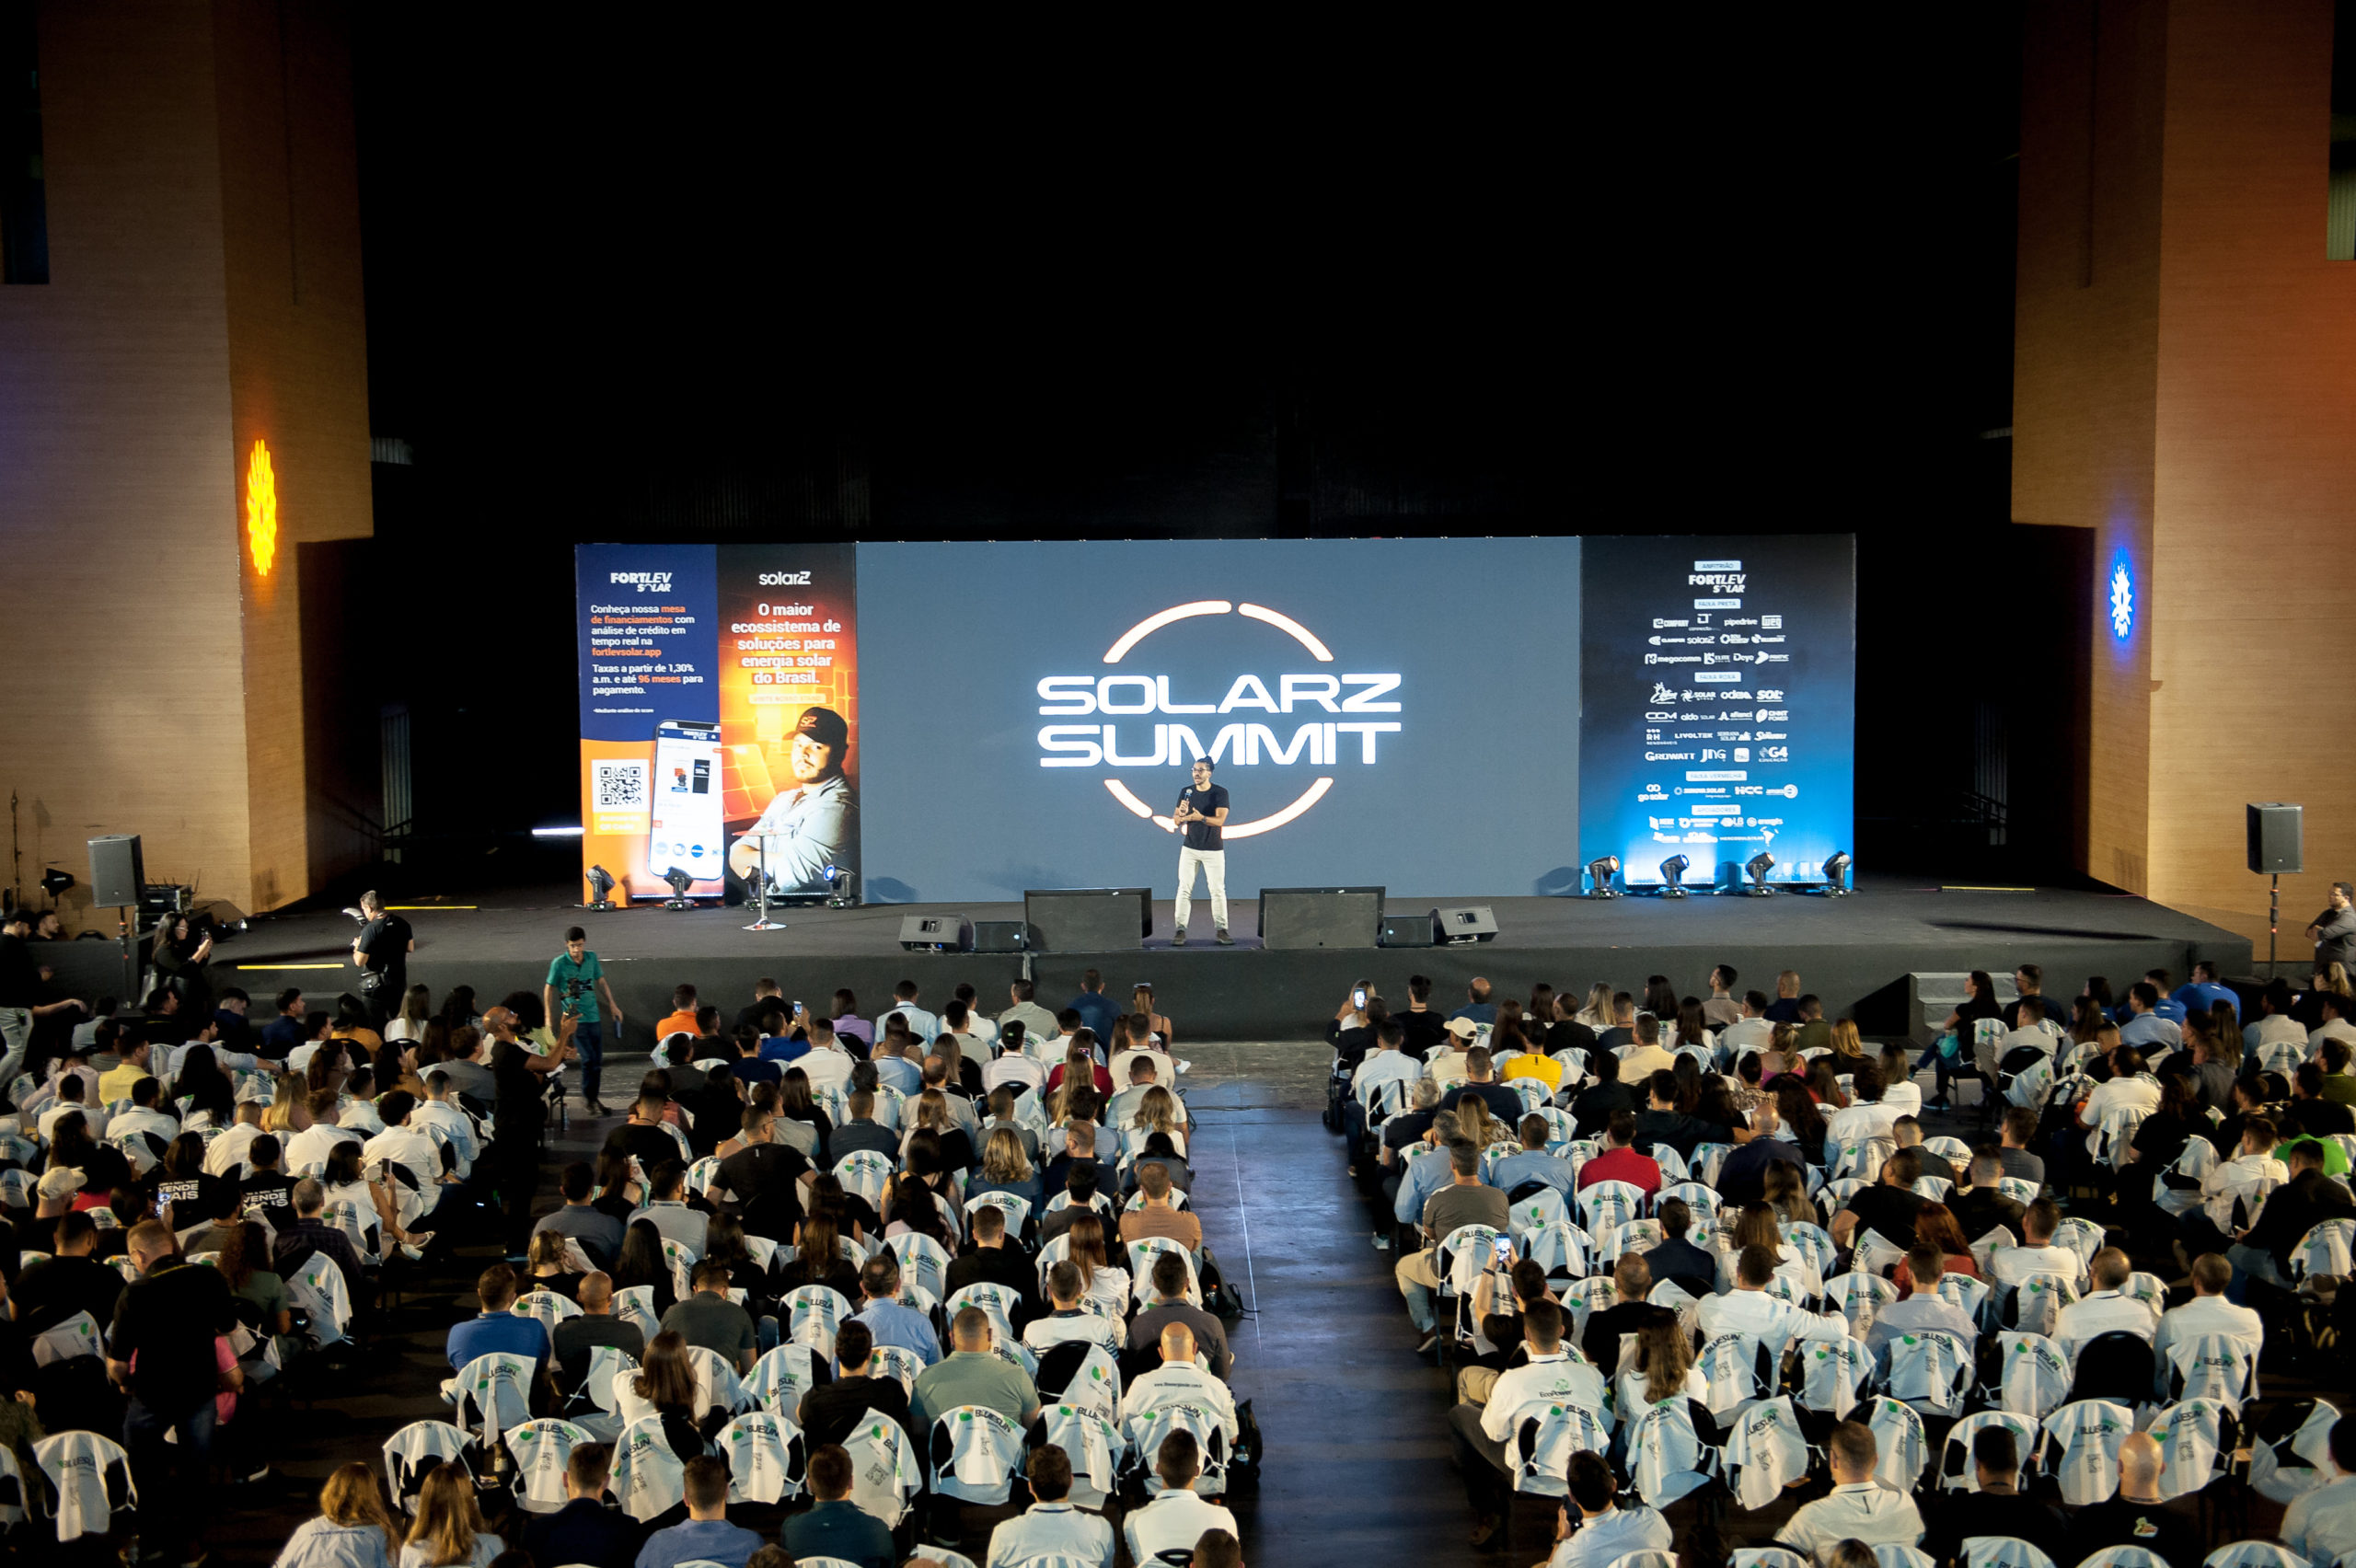 Evento SolarZ Summit